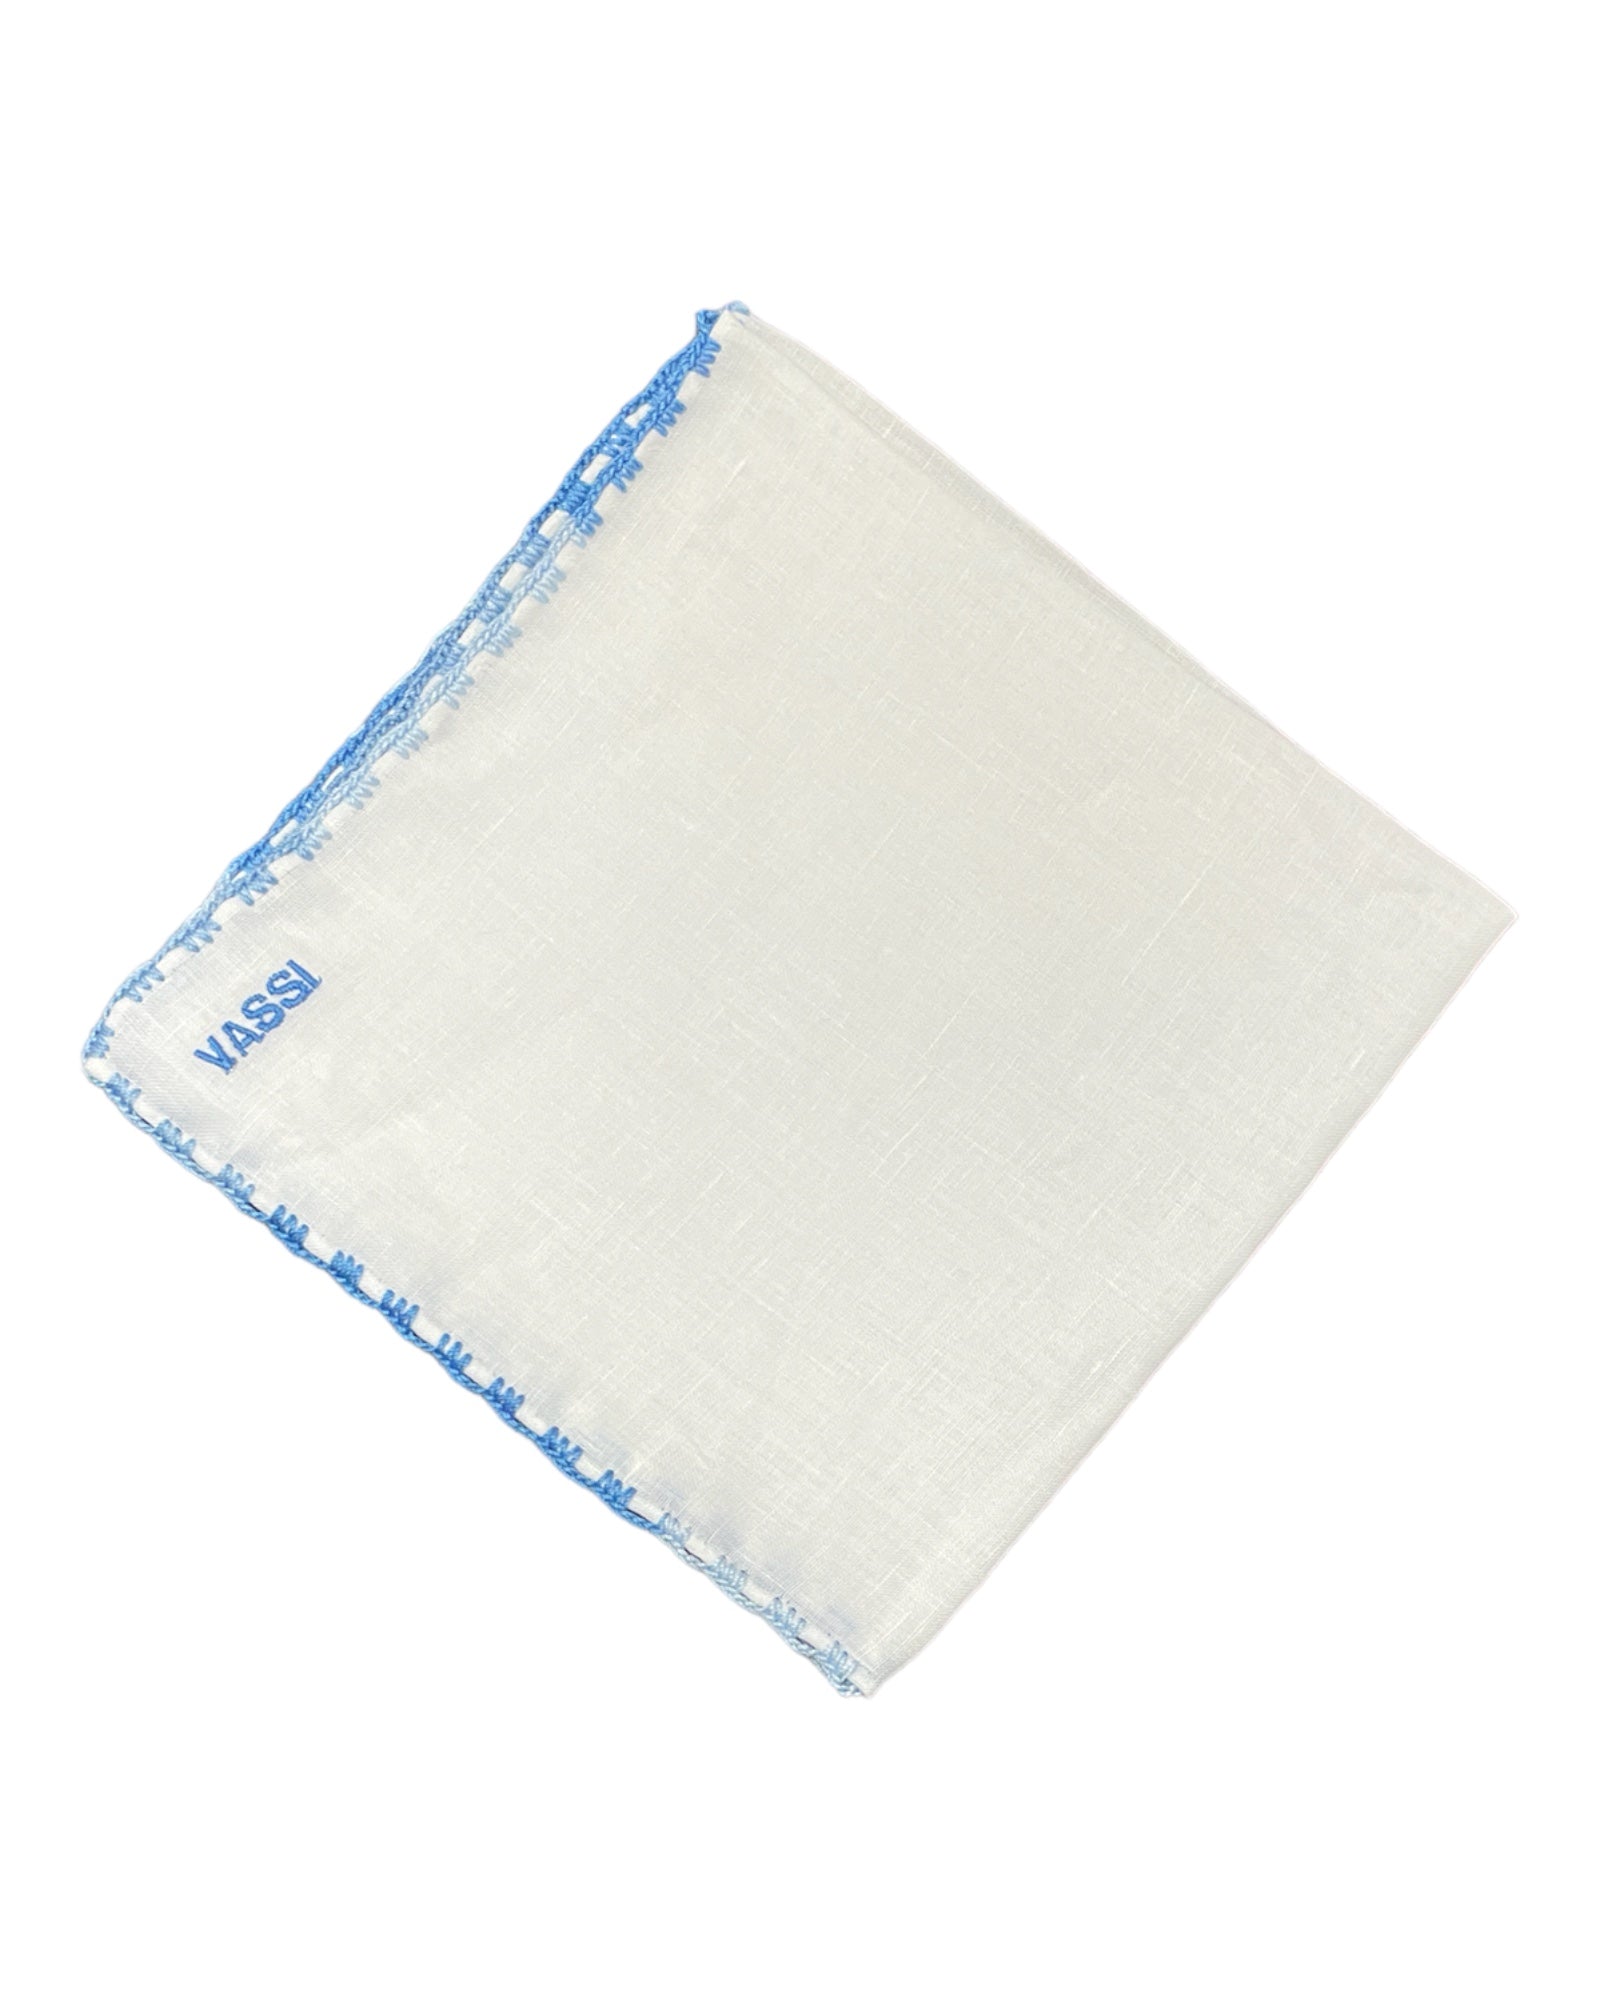 White Linen Pocket Square With Handrolled Triple V- Stitch Pocket SquareBlue-Light blue